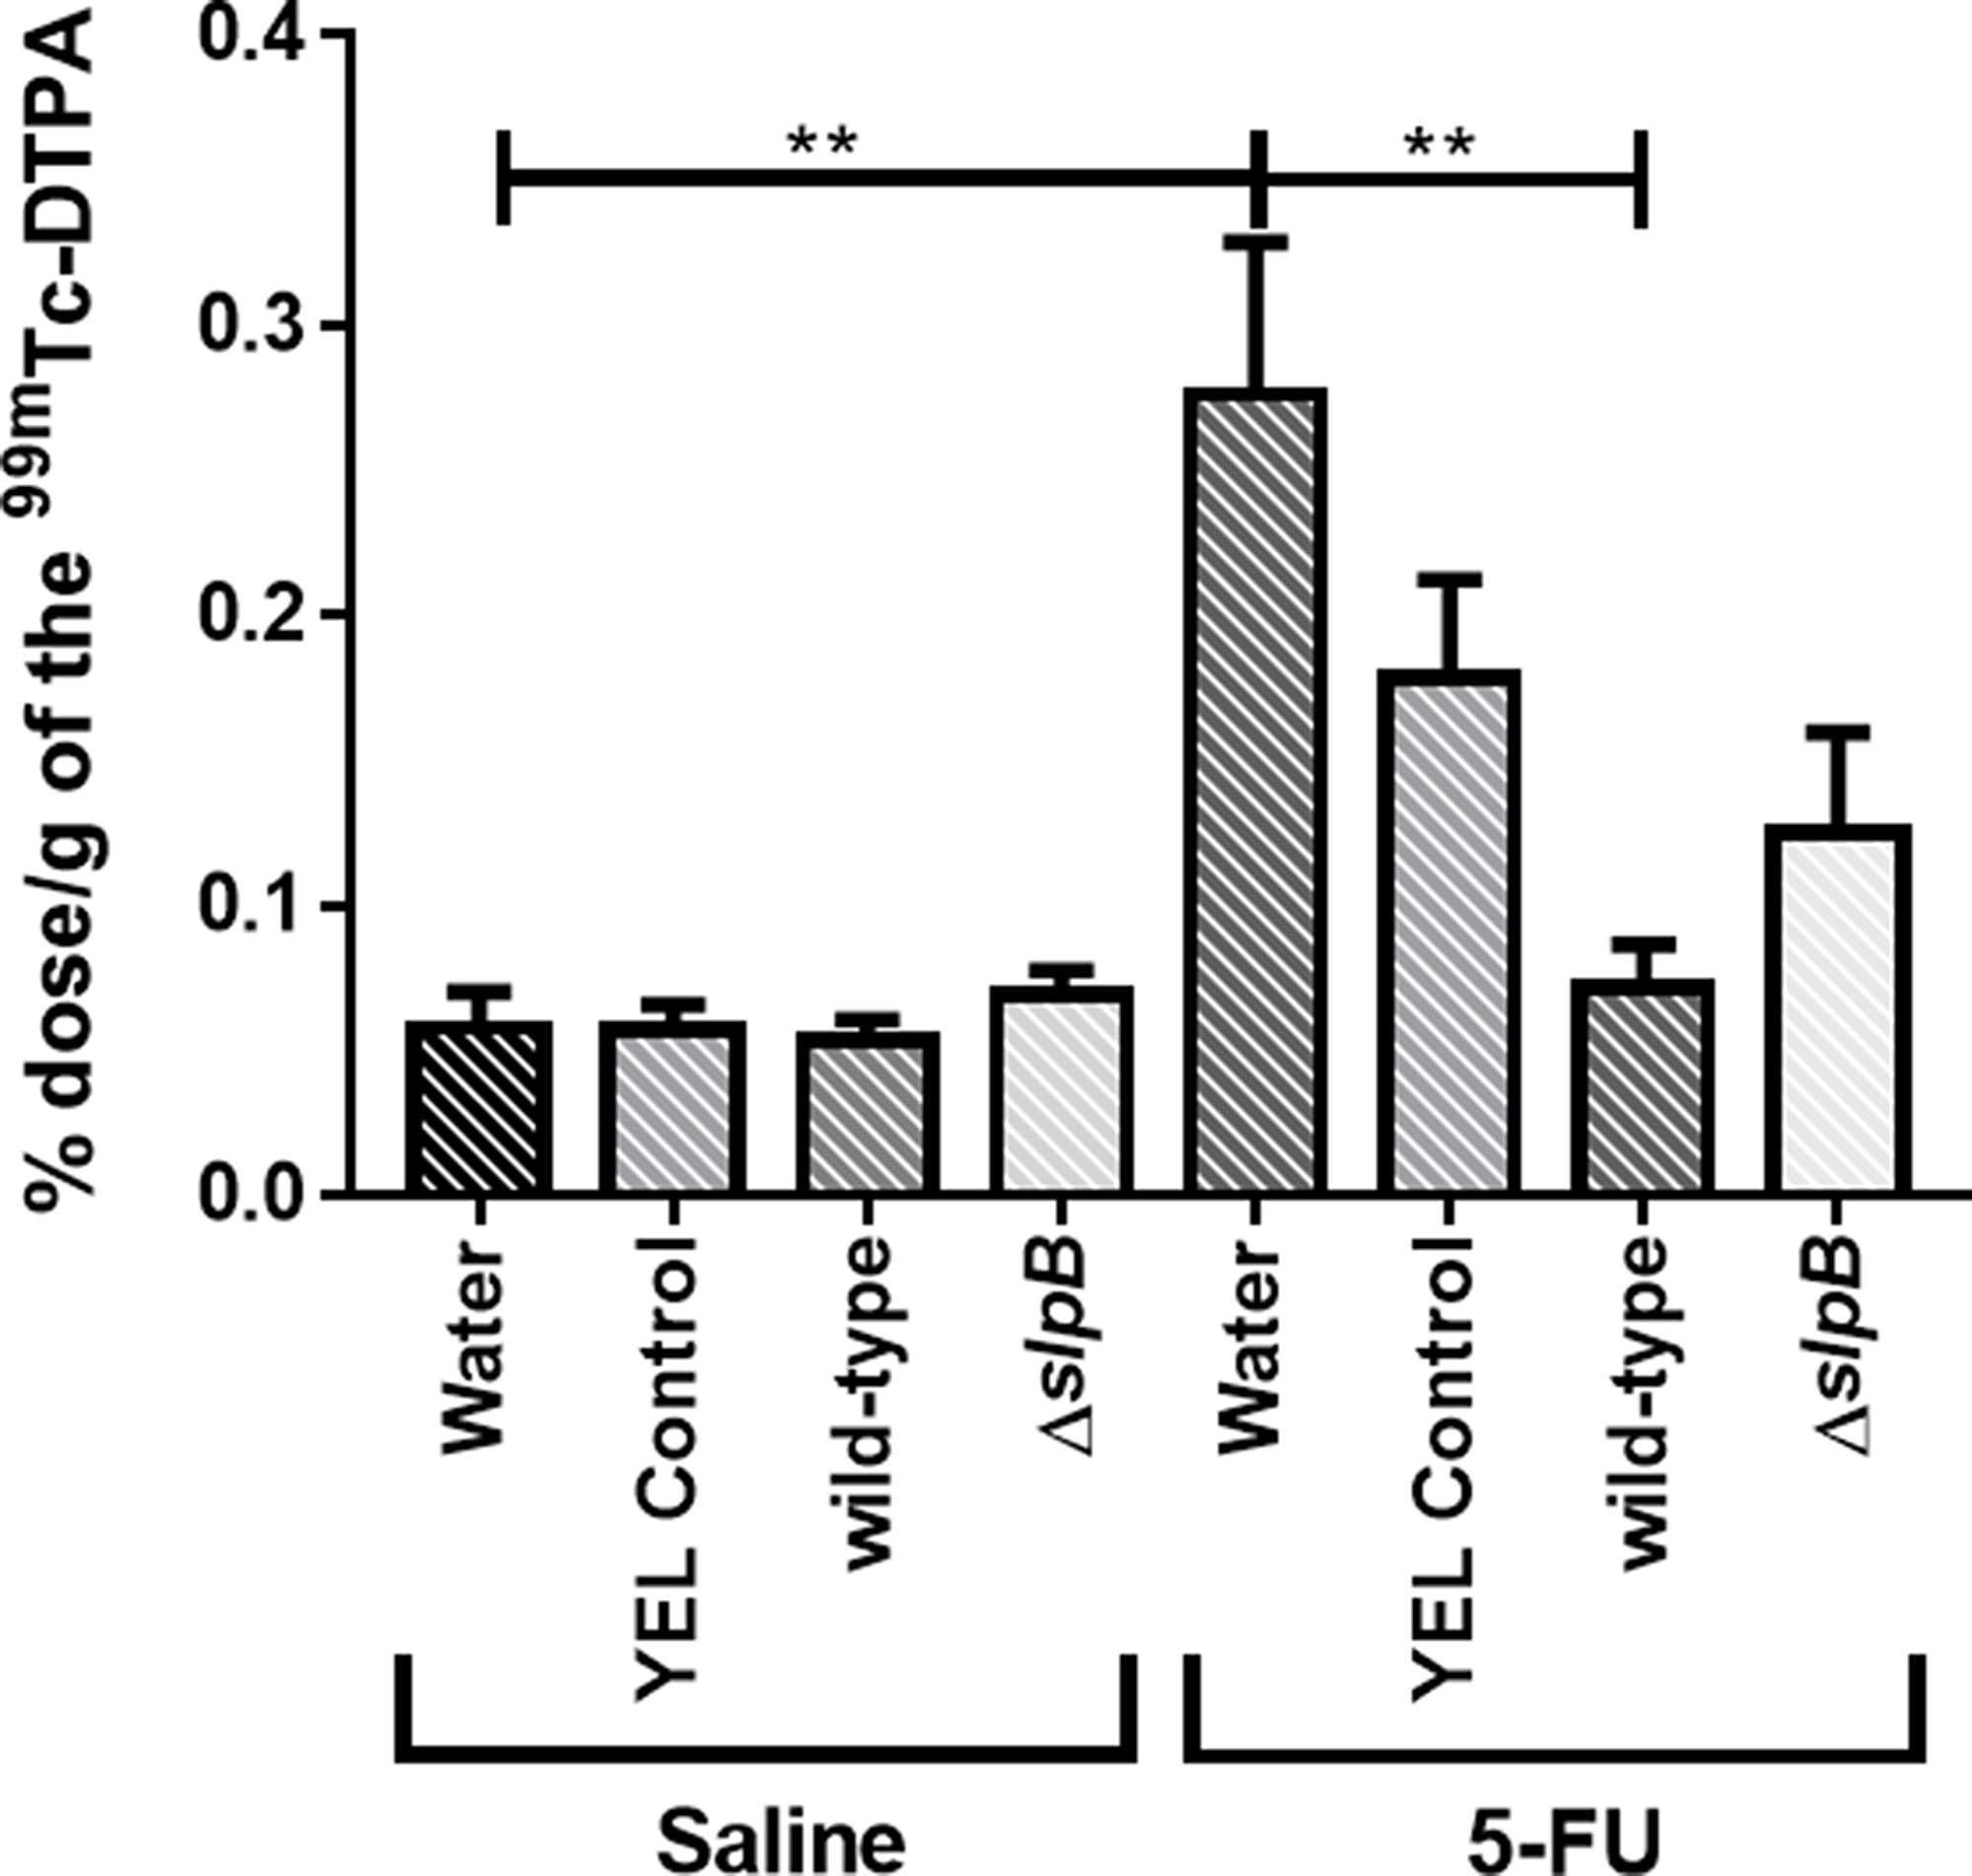 Propionibacterium freudenreichii WT consumption decreases intestinal permeability in 5-FU-treated mice.